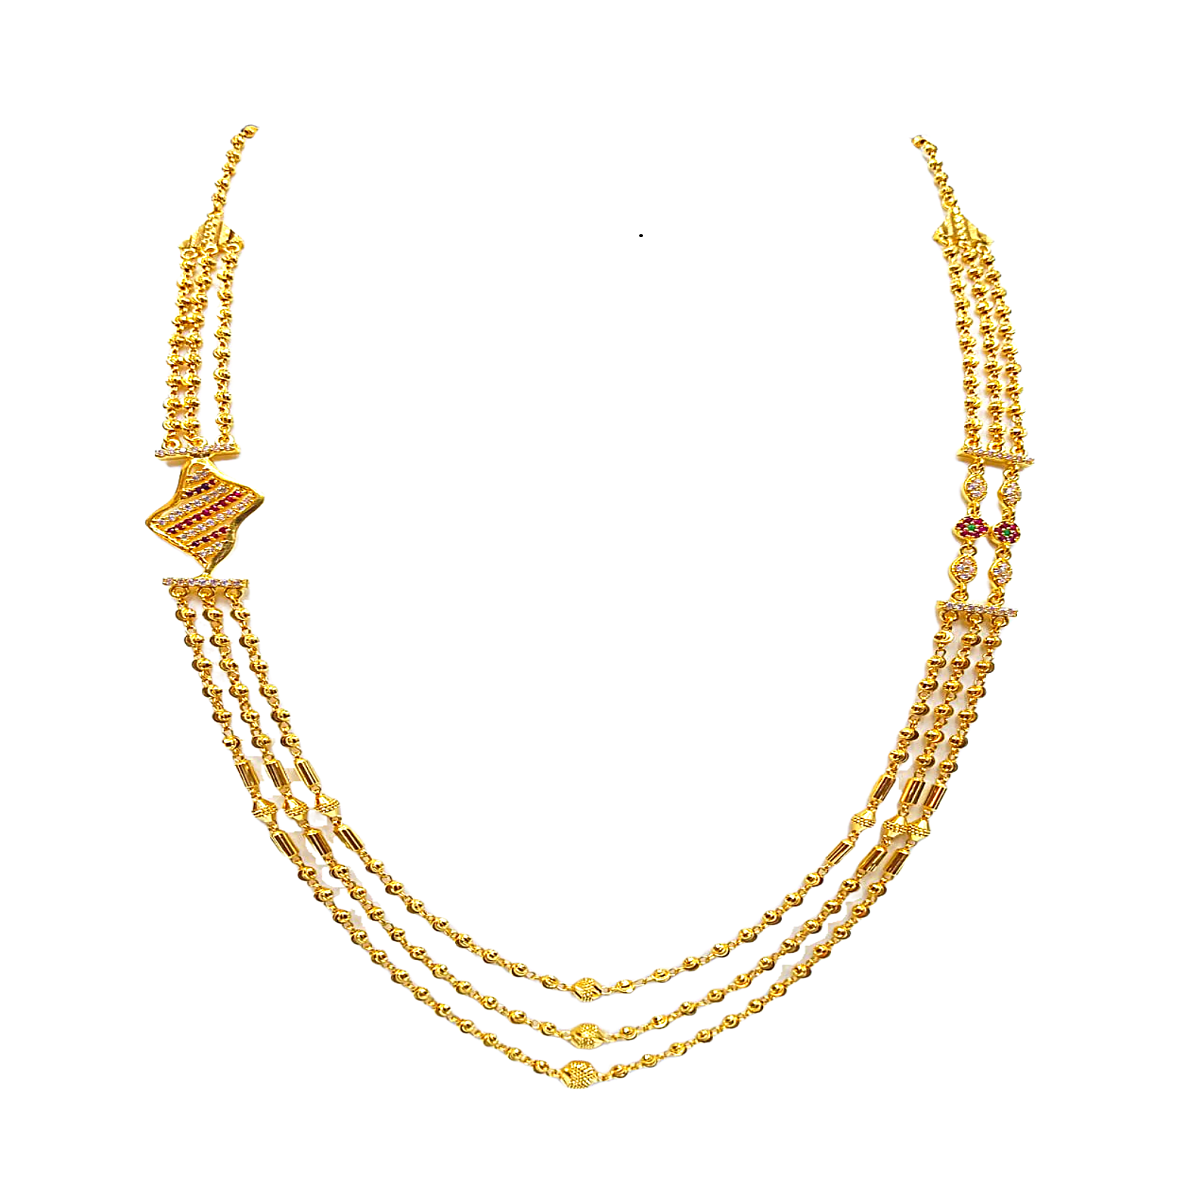 Pratapaditya gold chain